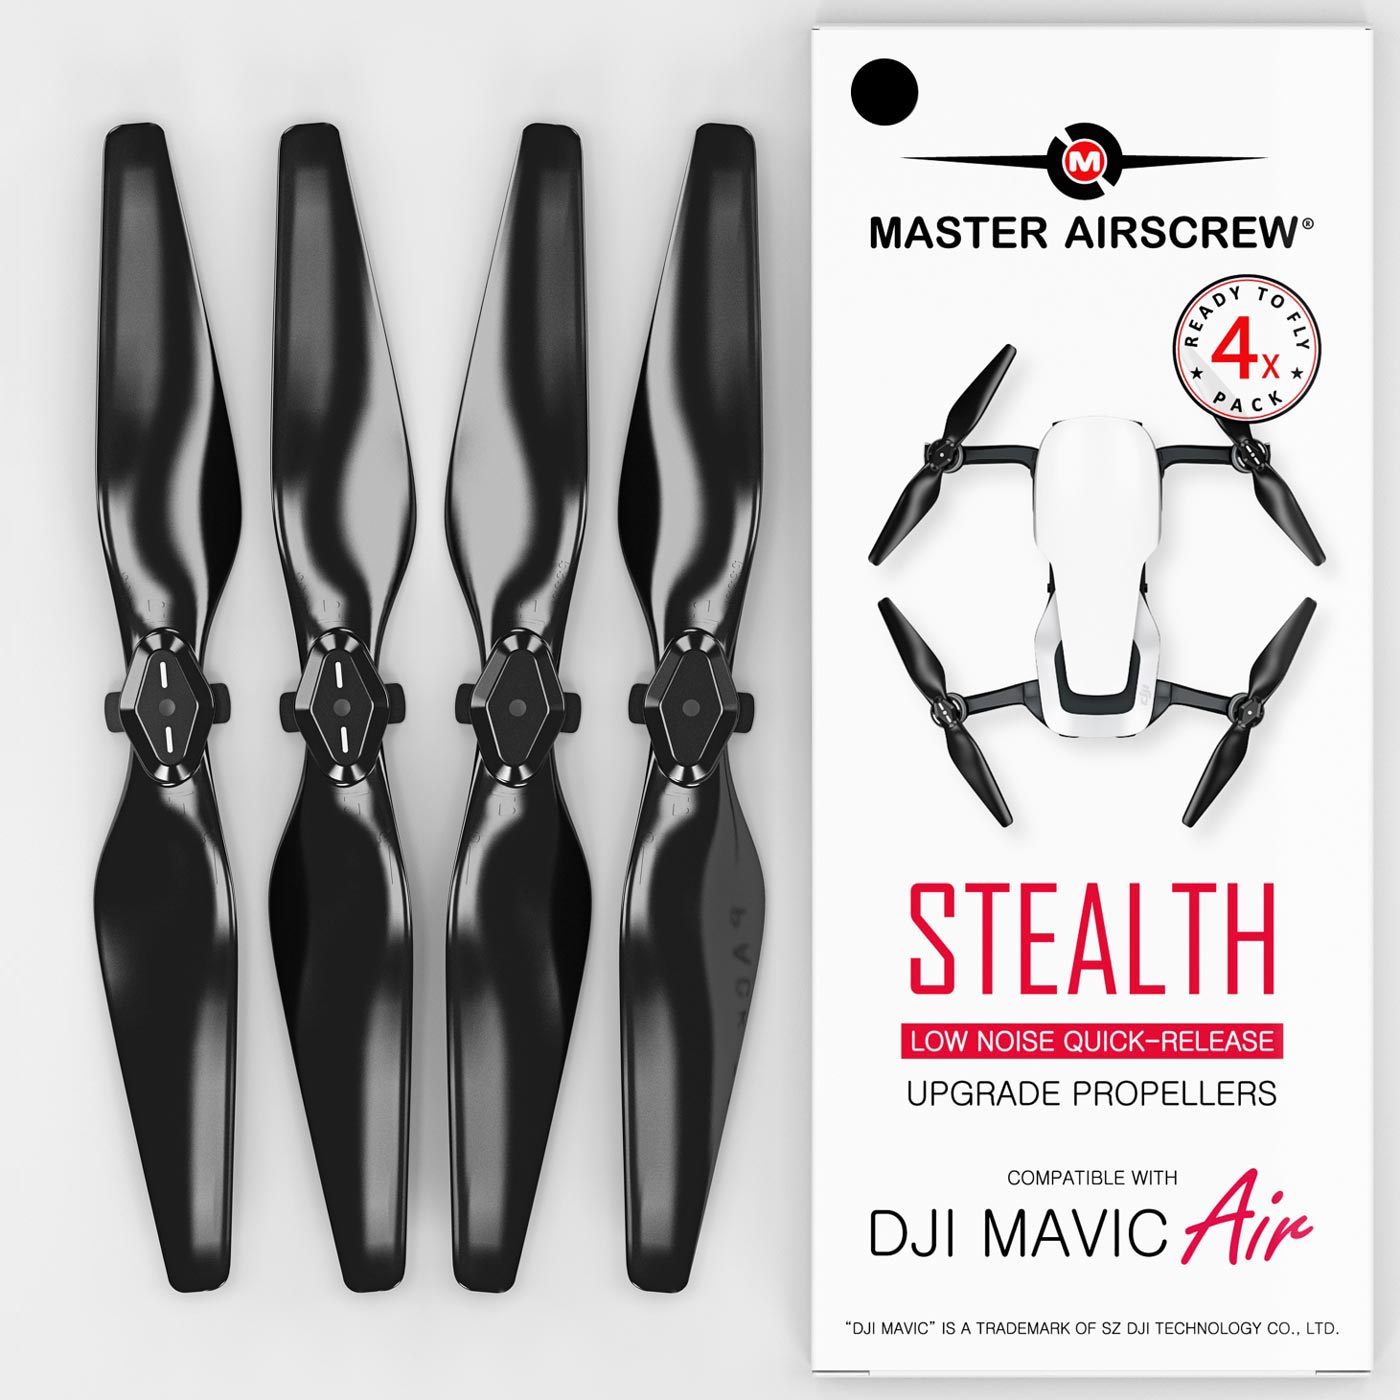 Daisy jage Diskurs DJI Mavic Air Low-Noise STEALTH Upgrade Propellers V2 - x4 BLACK - Master  Airscrew